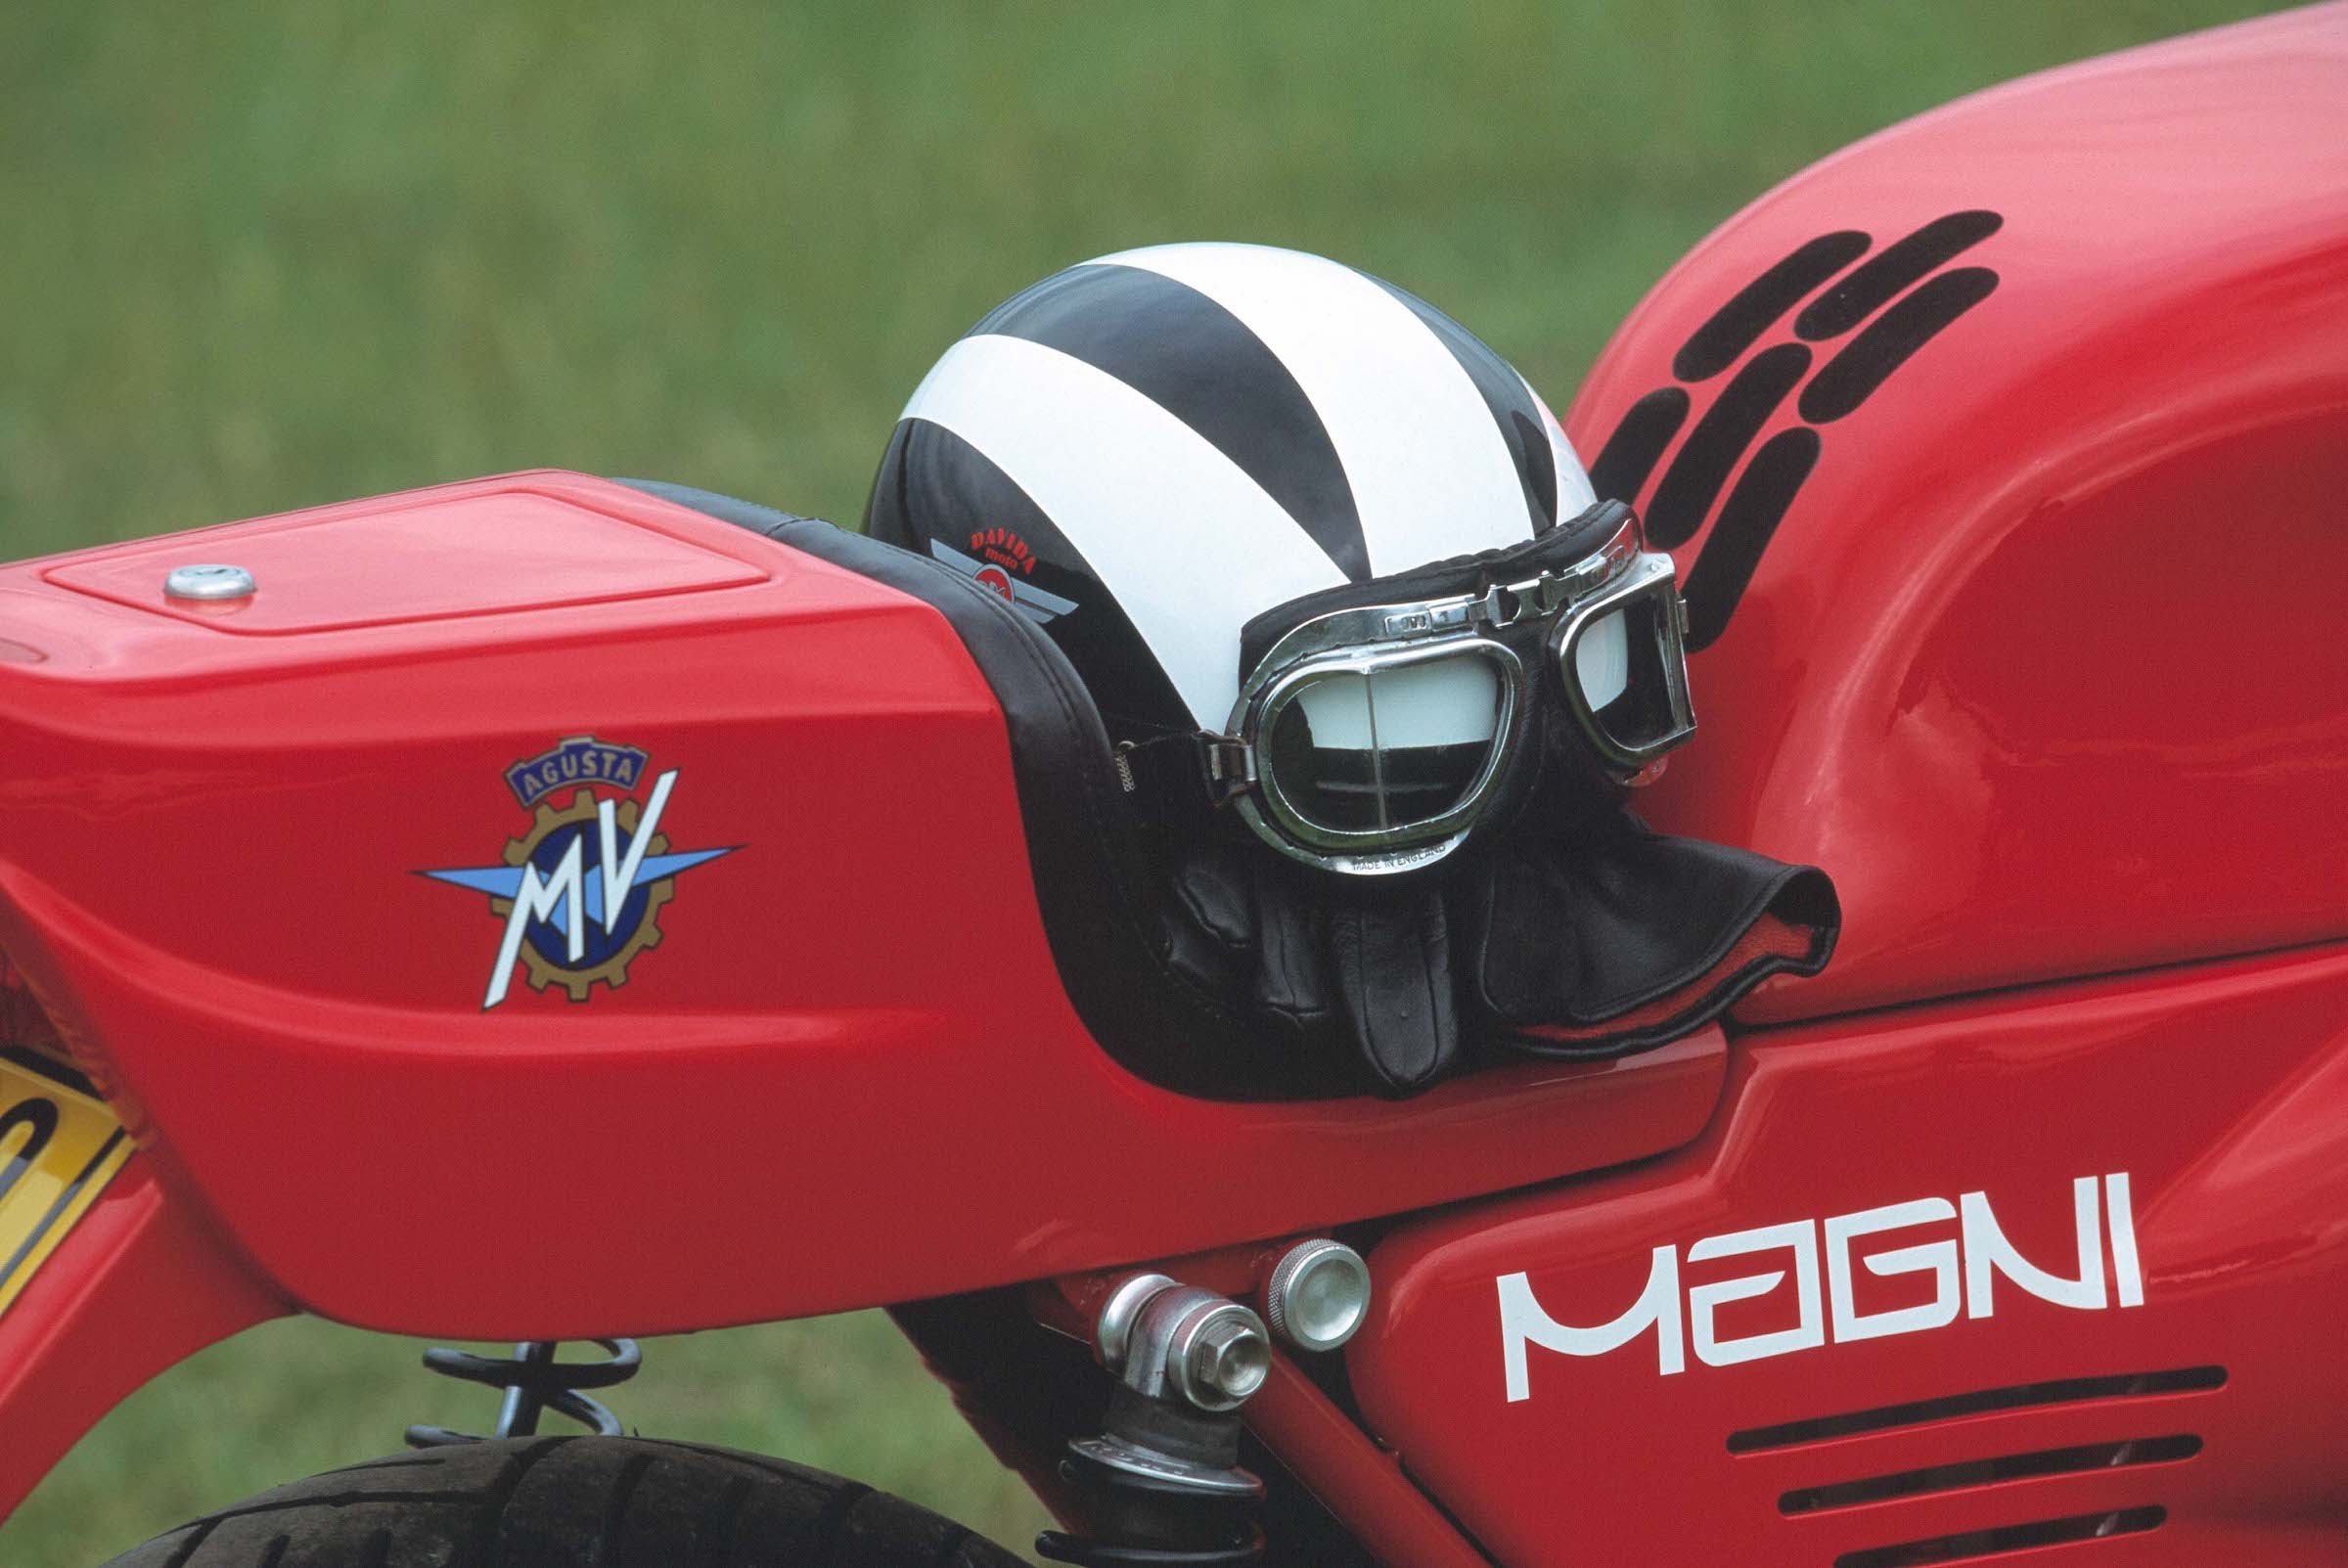 MV Agusta Magni helmet